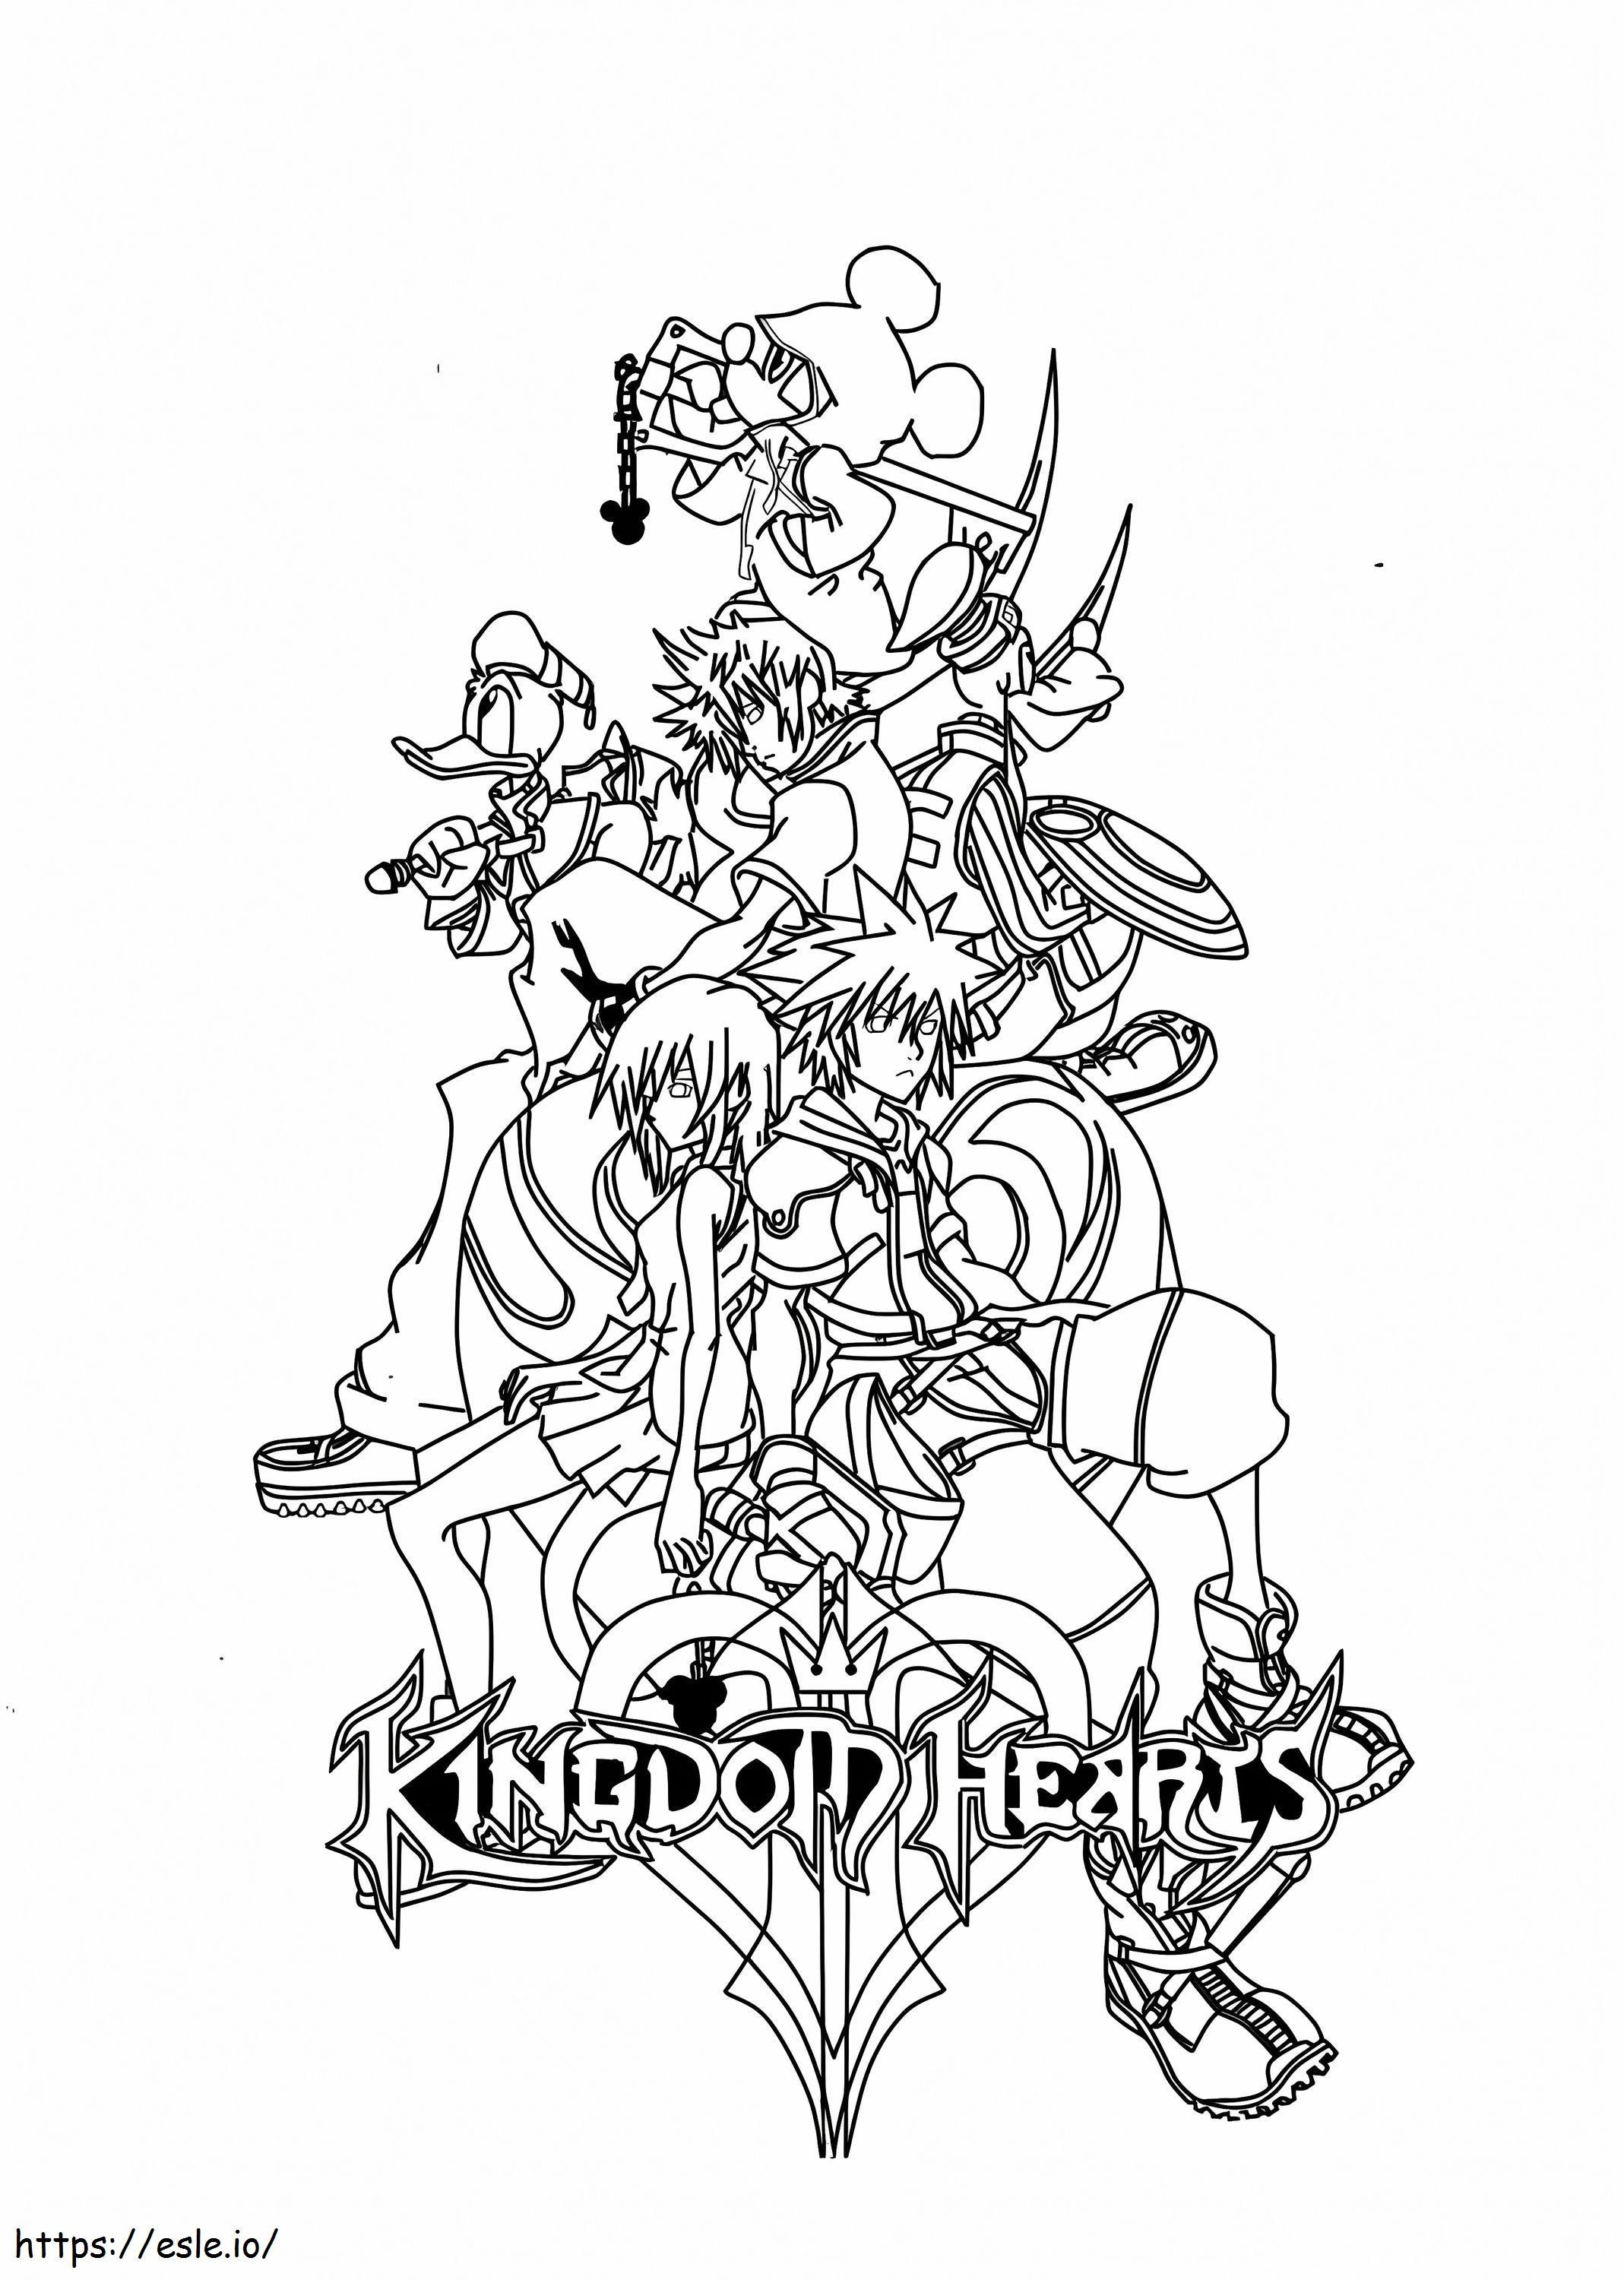 Charaktere aus Kingdom Hearts ausmalbilder